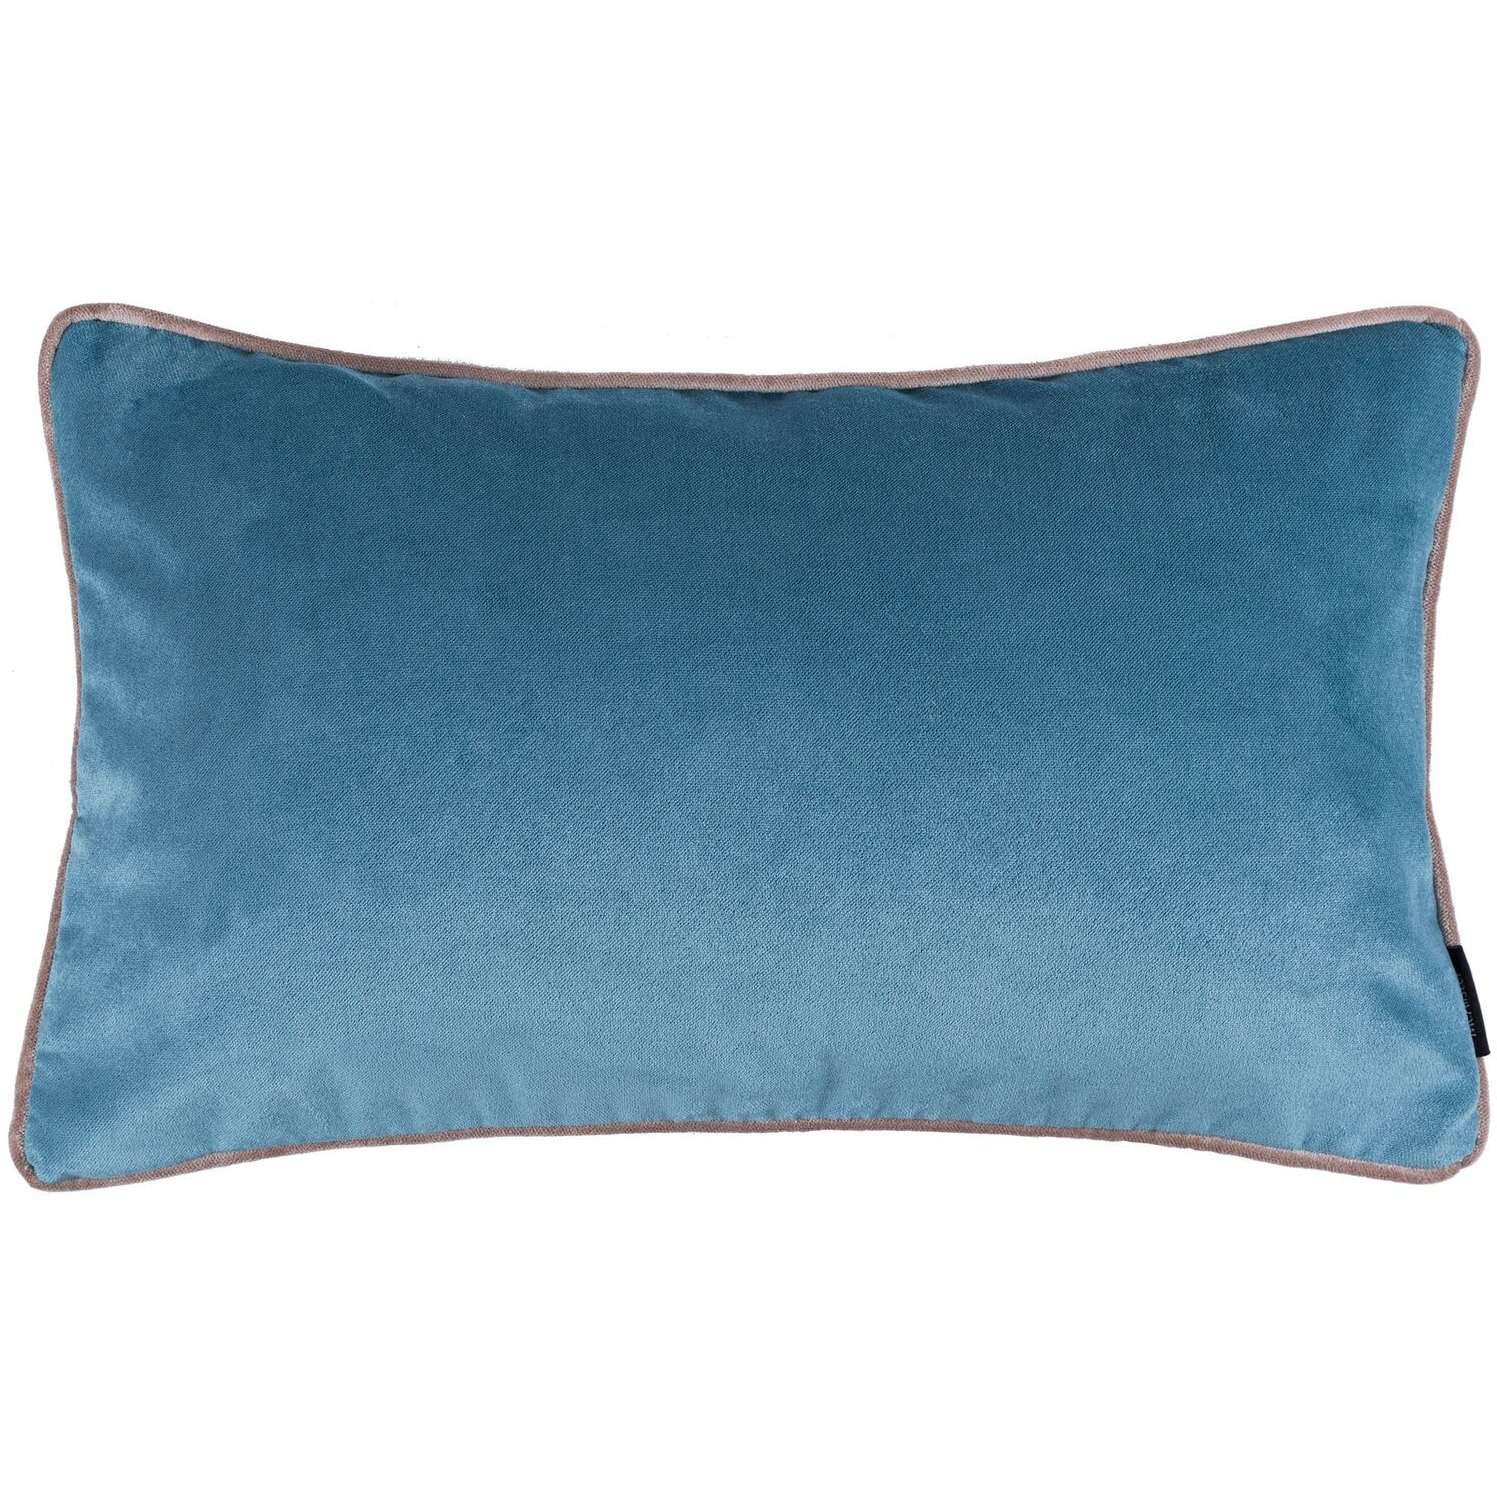 McAlister Textiles Matt Duck Egg Blue Velvet Pillow Pillow Cover Only 50cm x 30cm 